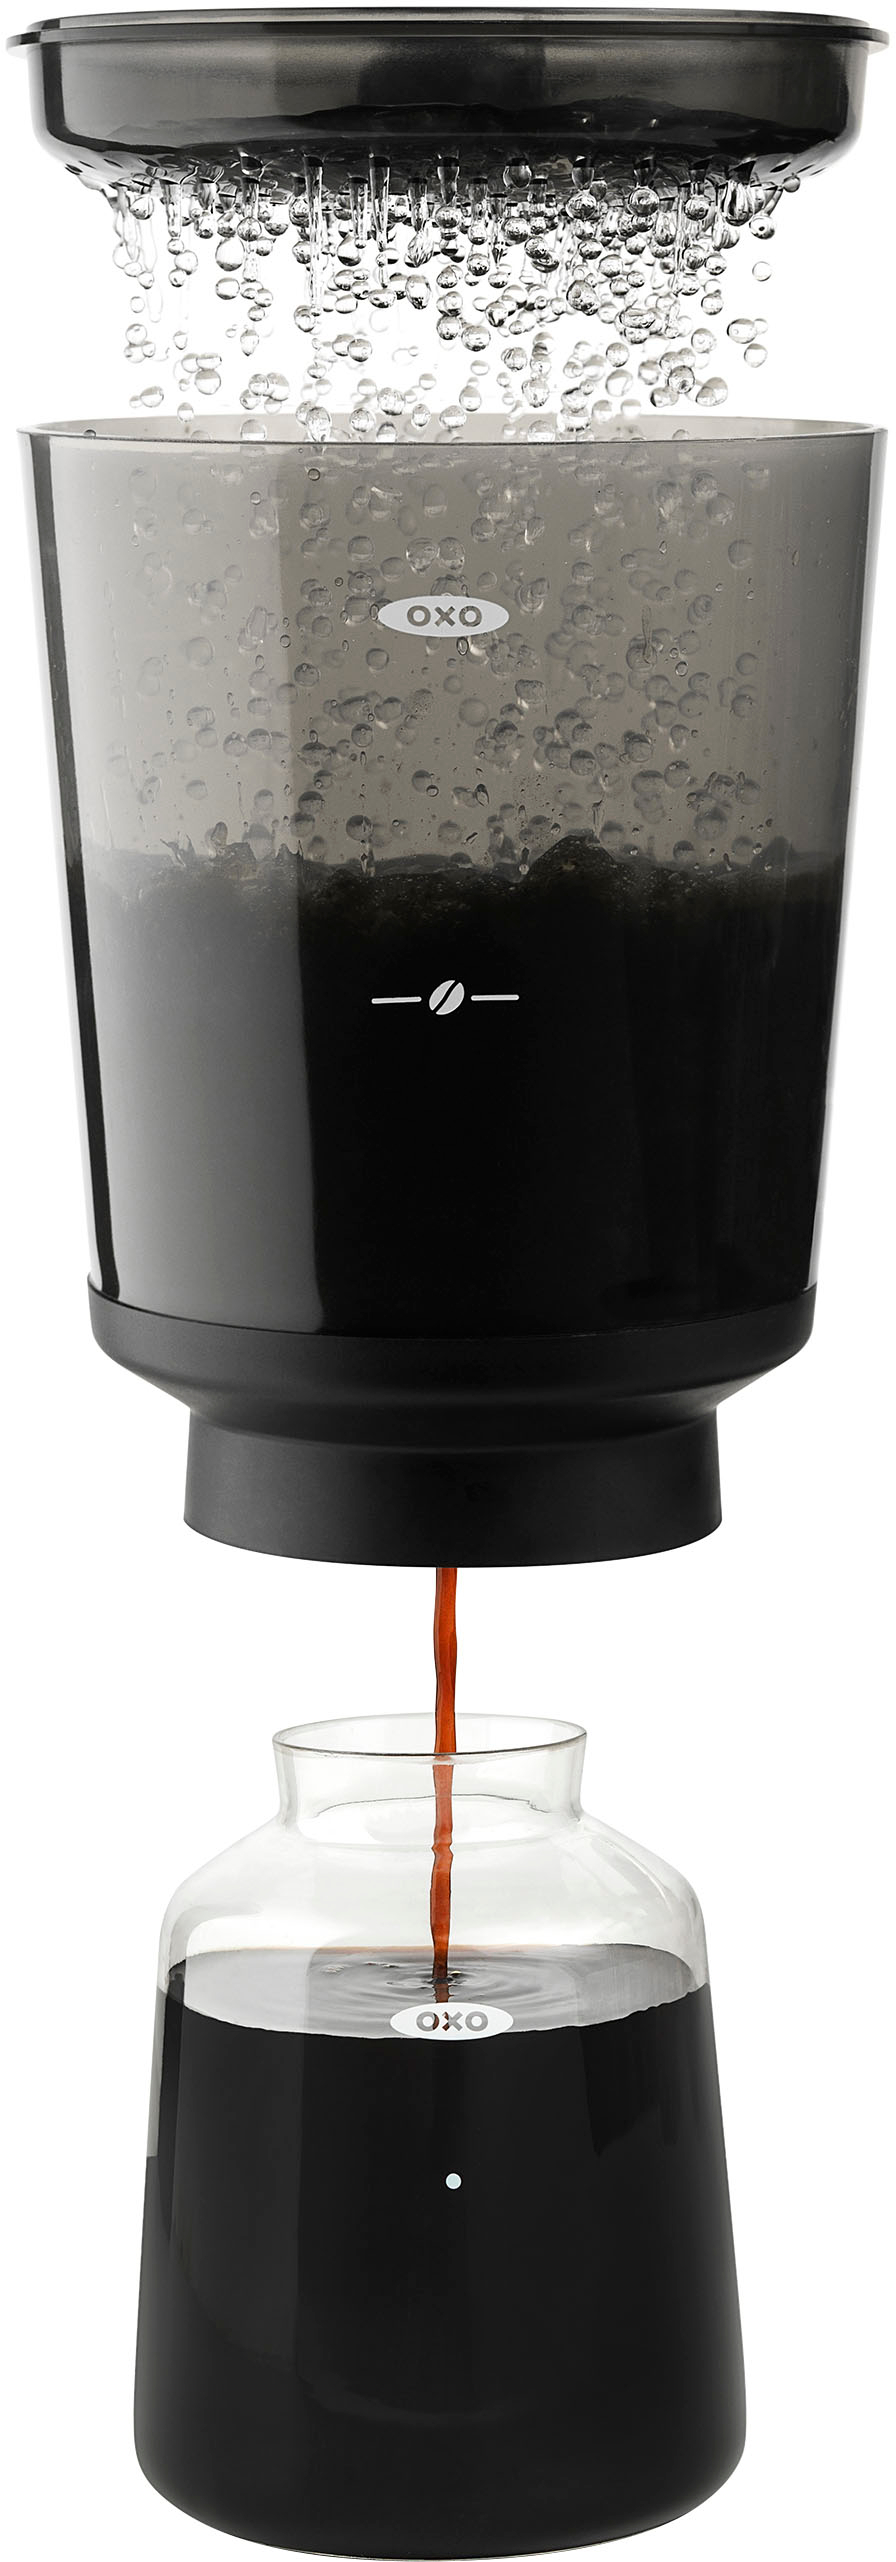 OXO Brew Compact Cold Brew Coffee Maker,Black